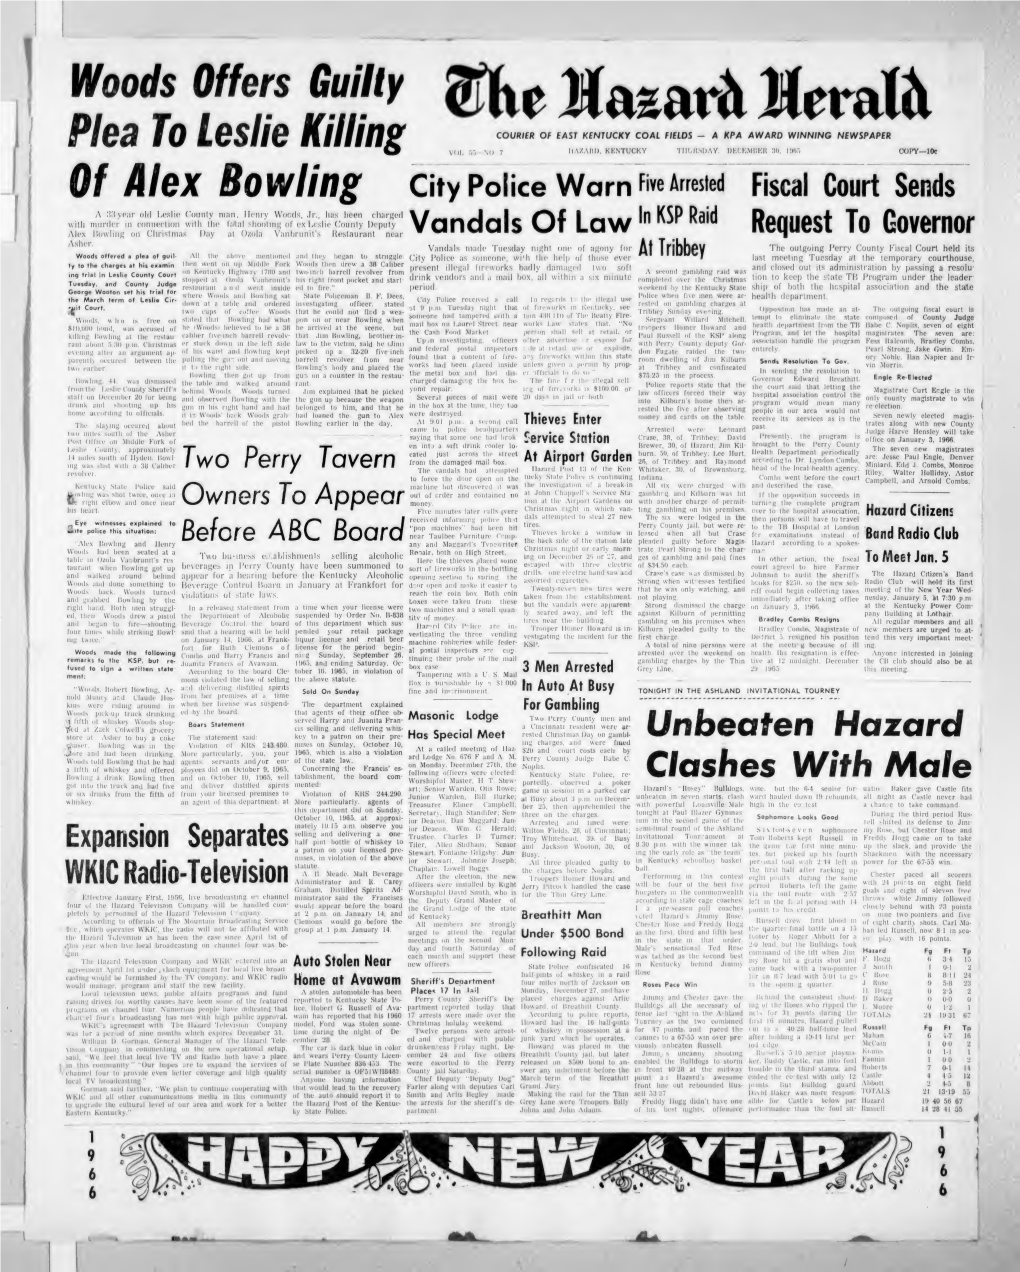 The Hazard Herald: 1965-12-30